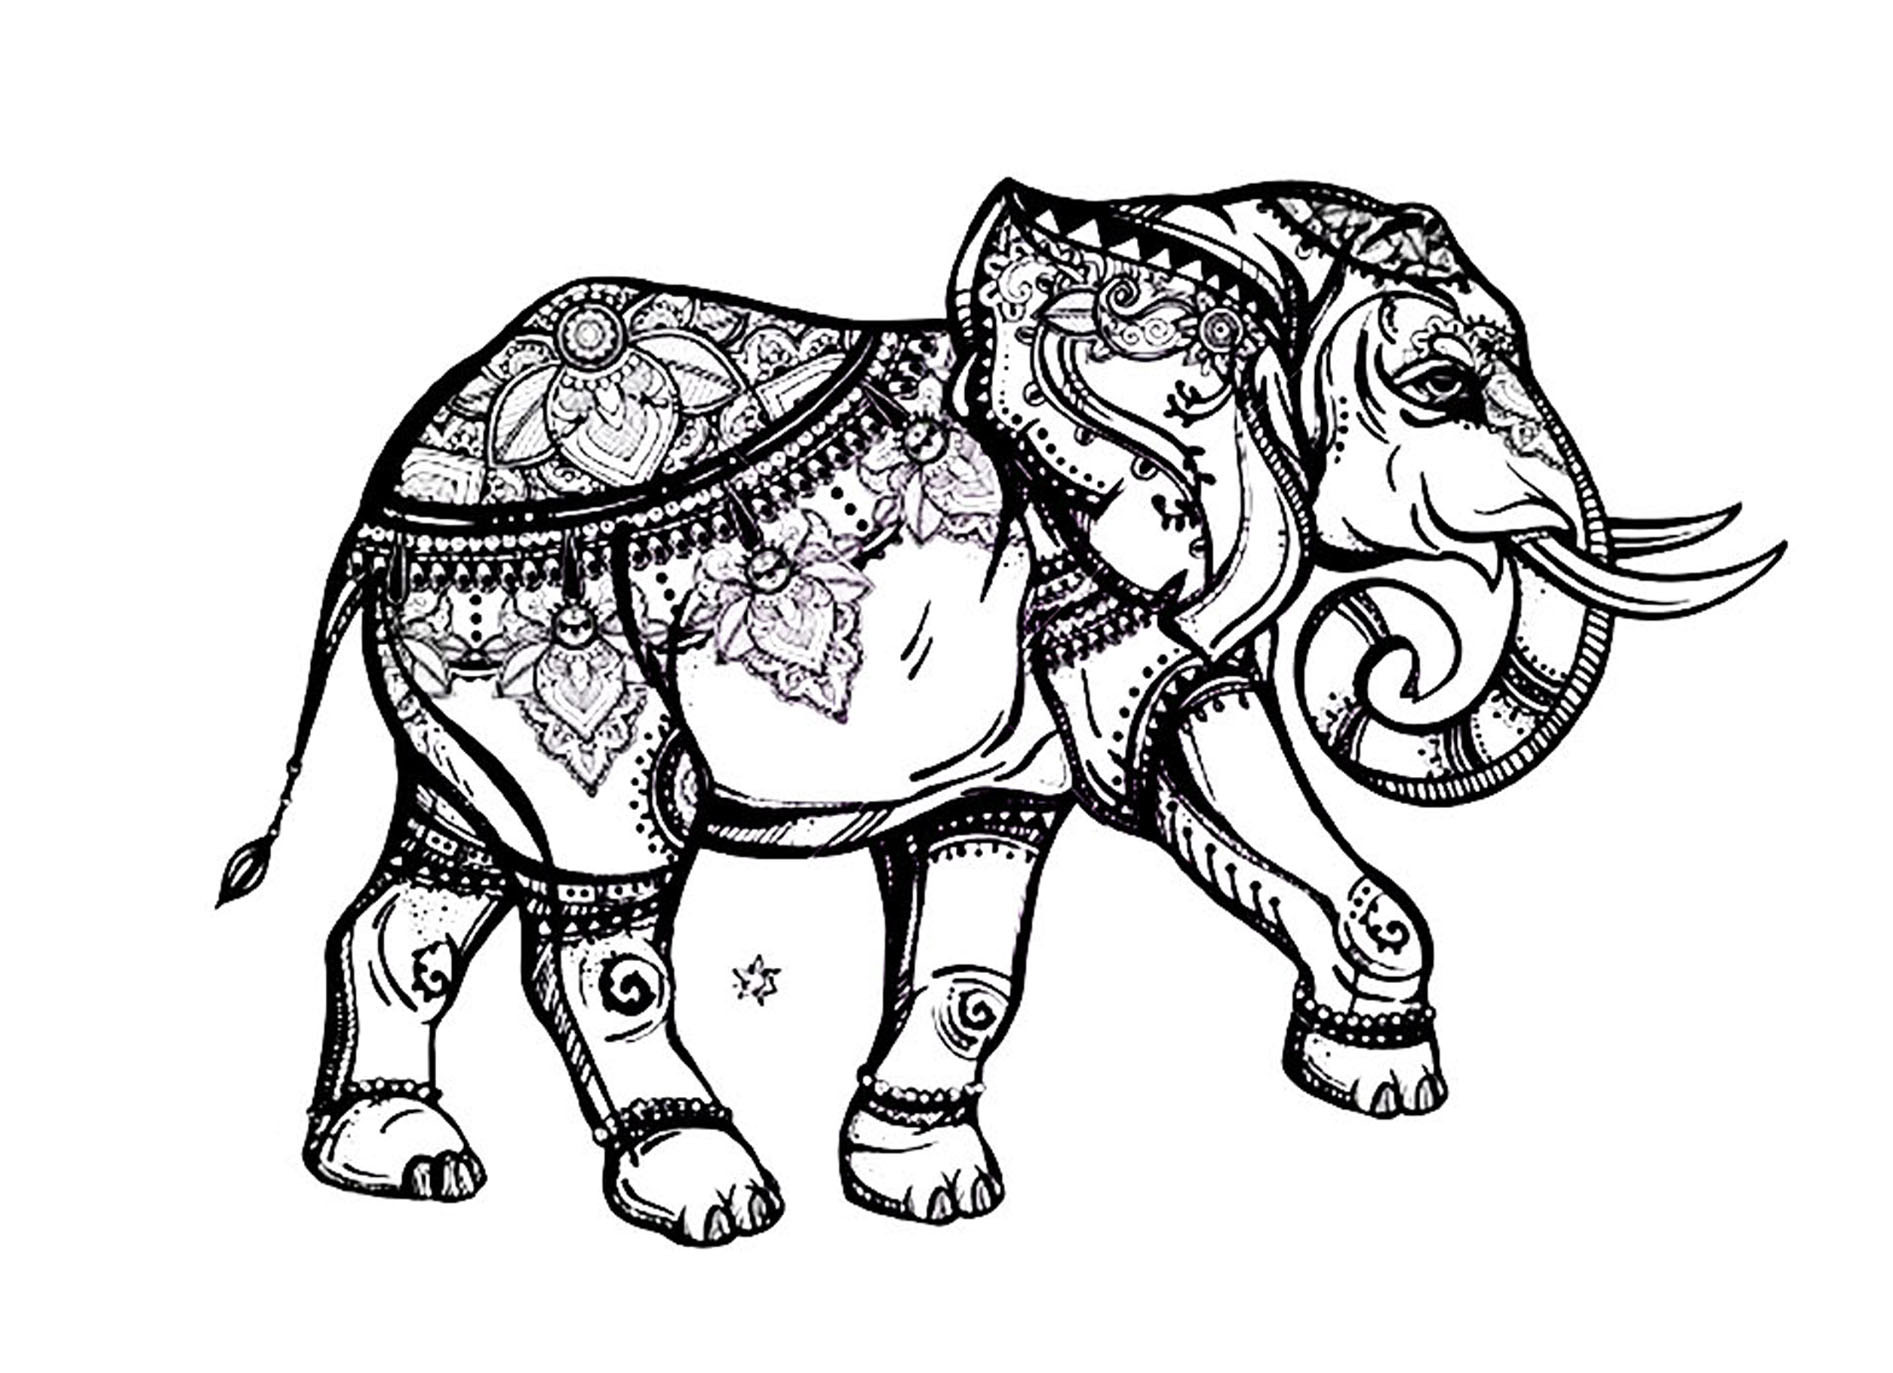 Elephant Adult Coloring Pages
 Elegant elephant Elephants Adult Coloring Pages